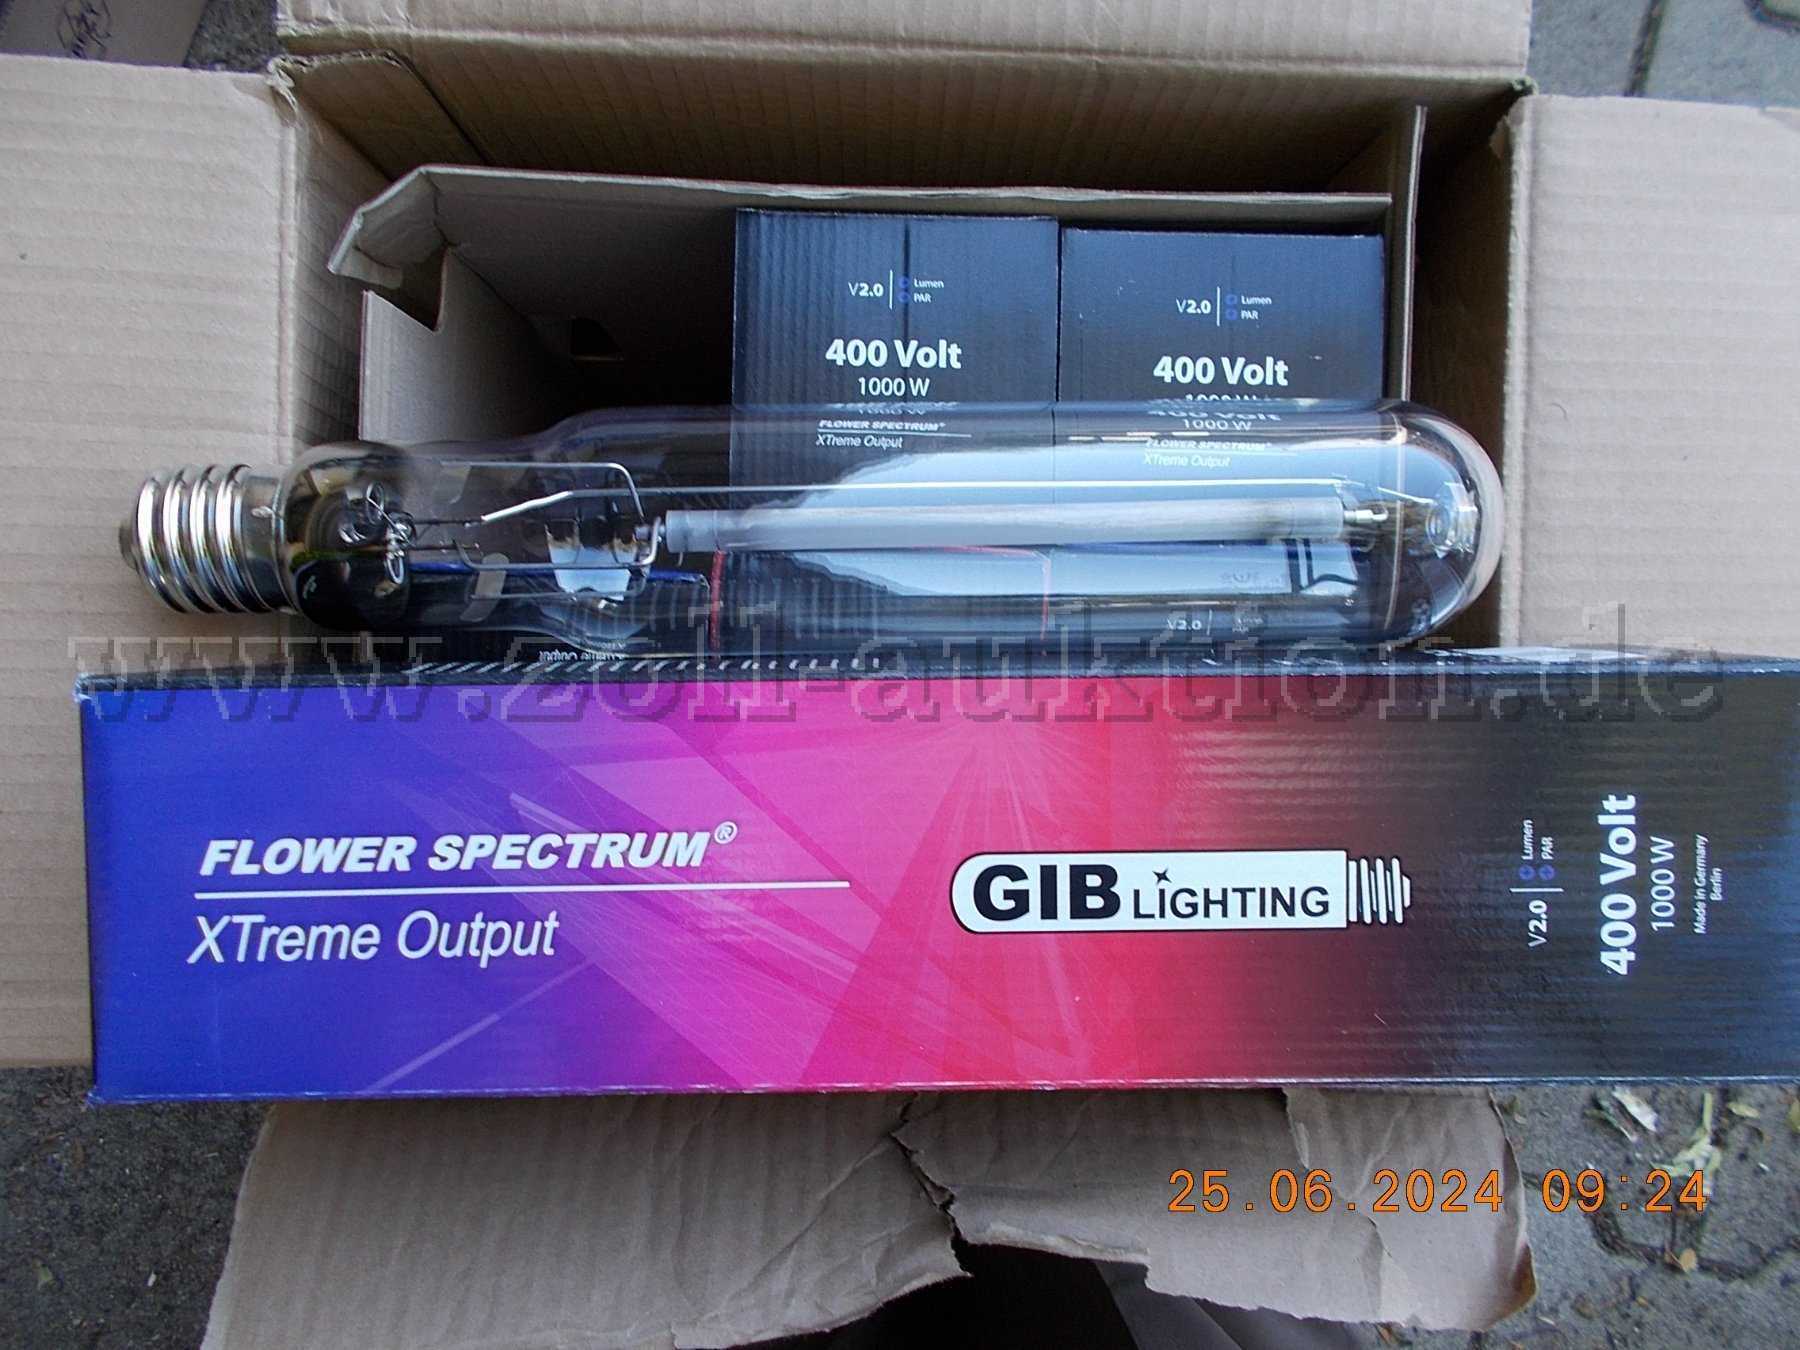 6x GIB-Lightning Flower Spectrum XTreme Output Natriumdampflampen